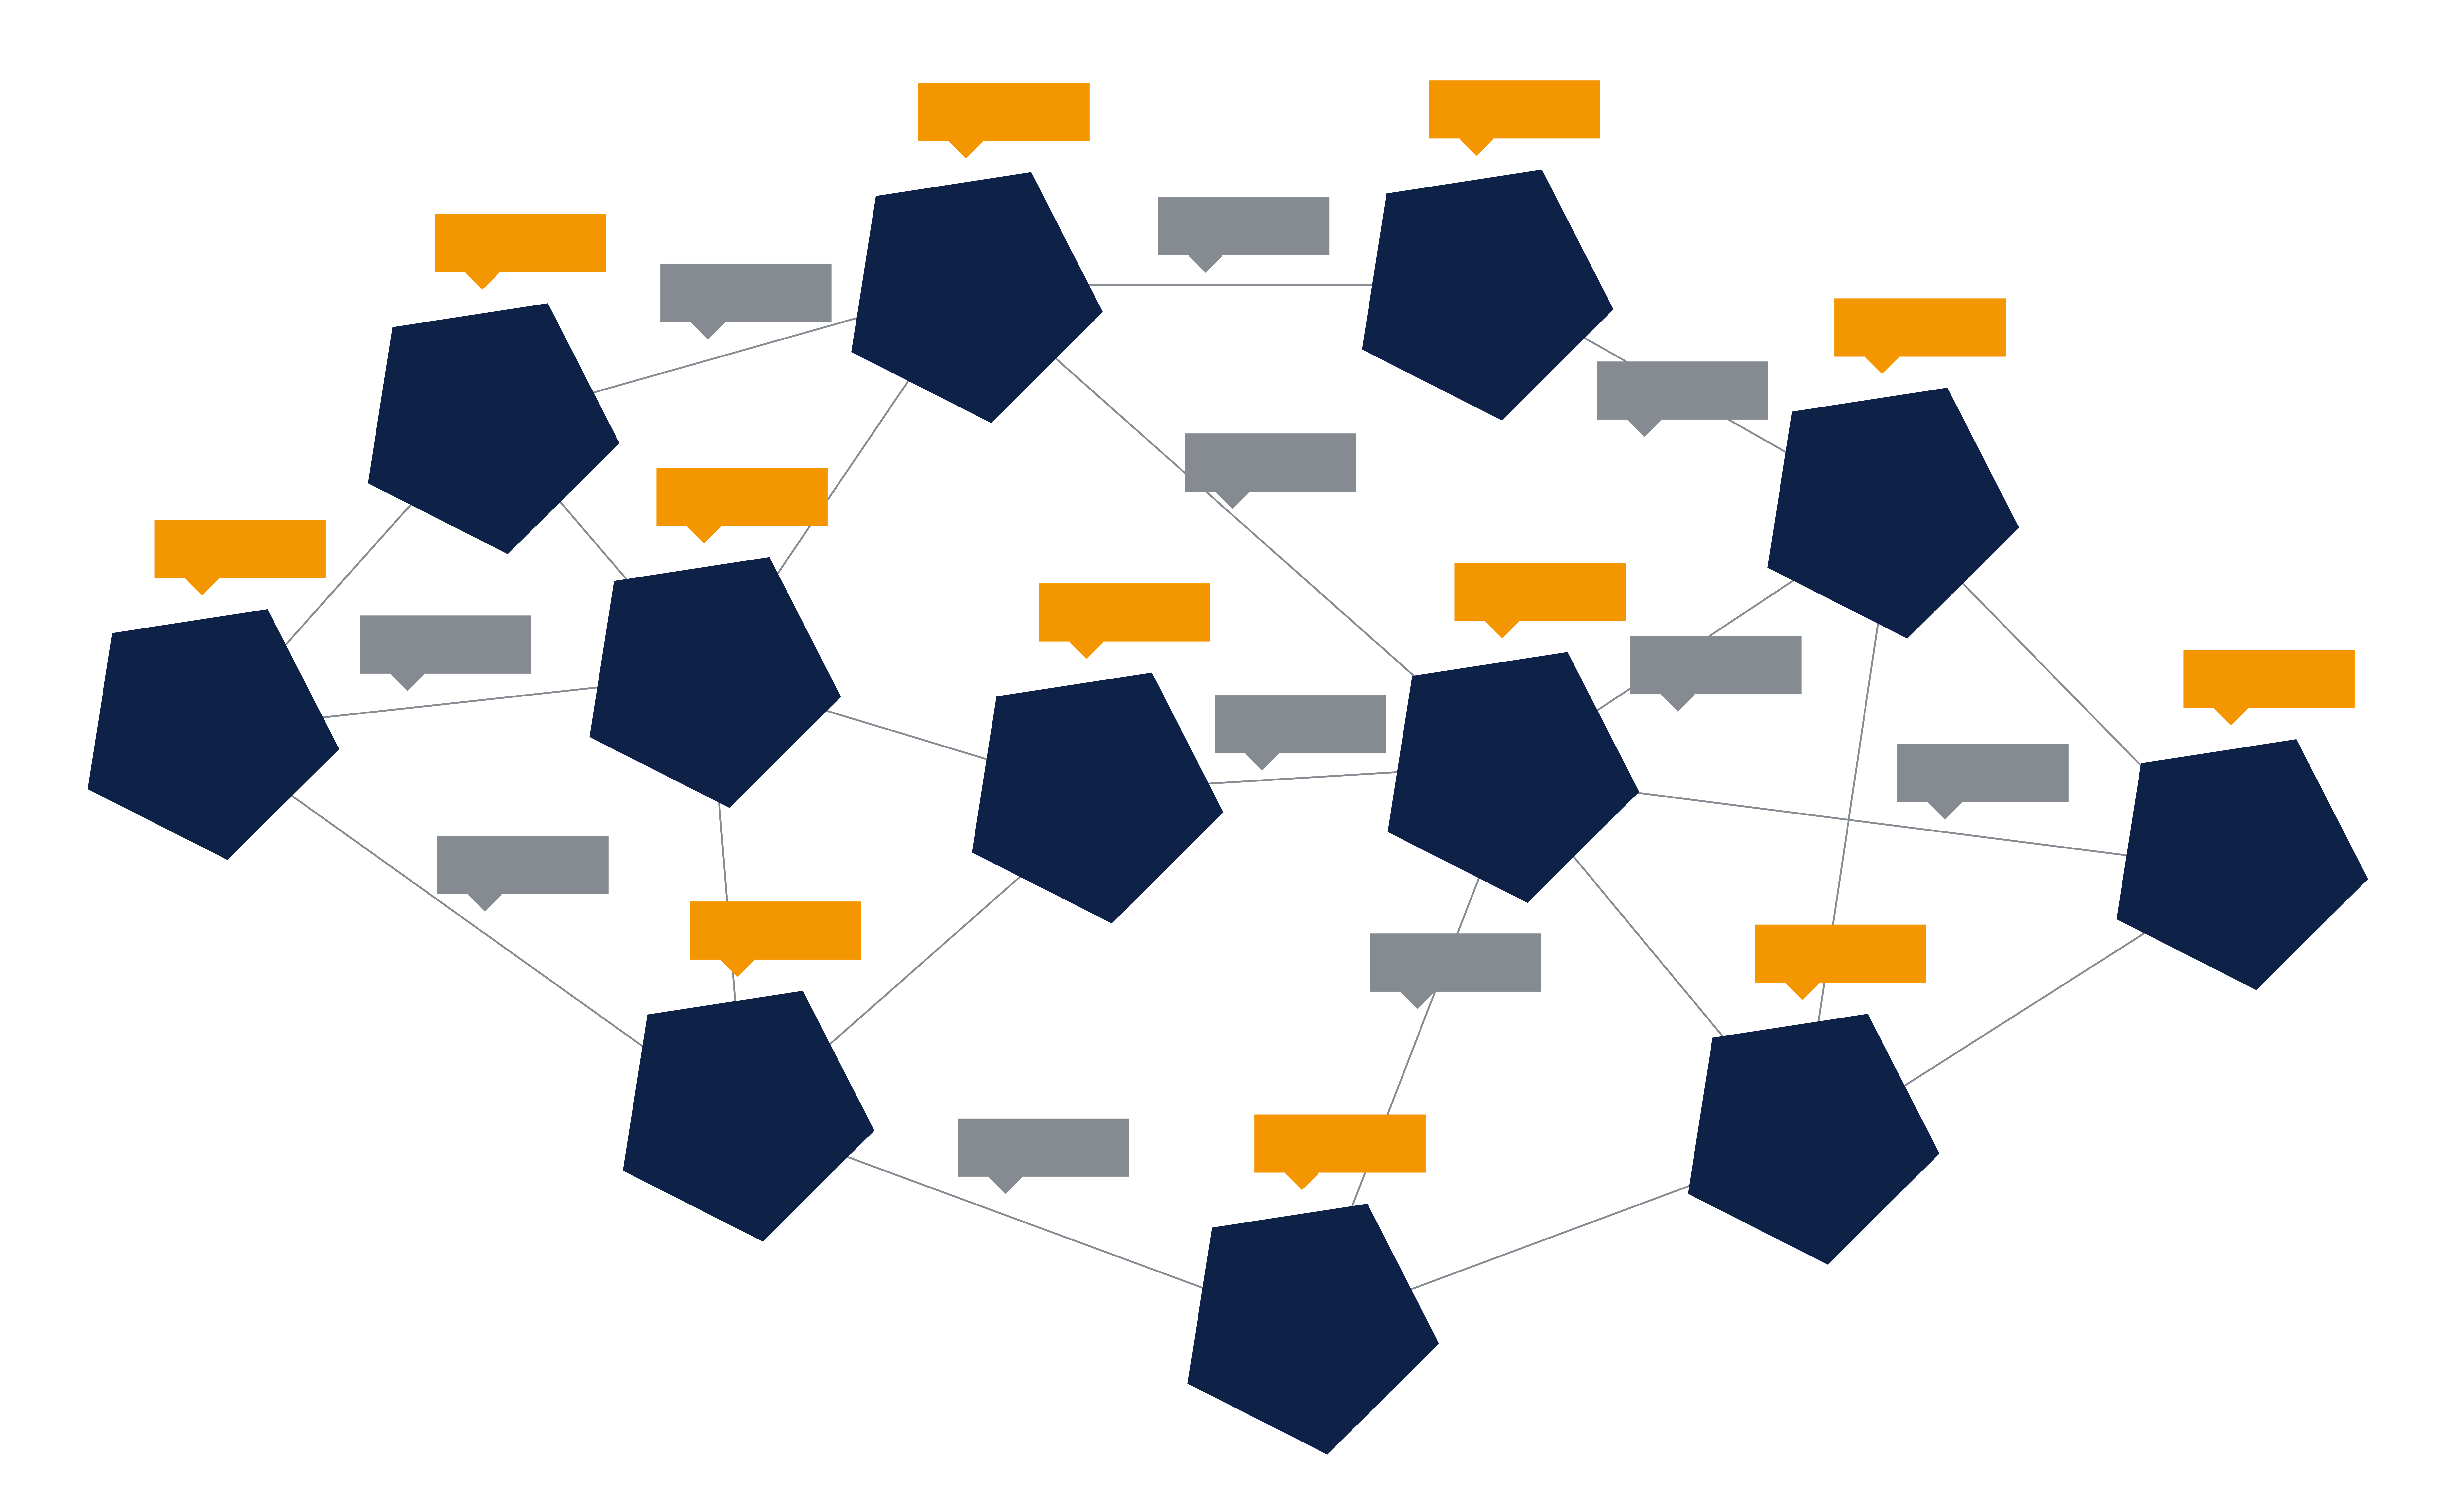 Semantic network of censhare